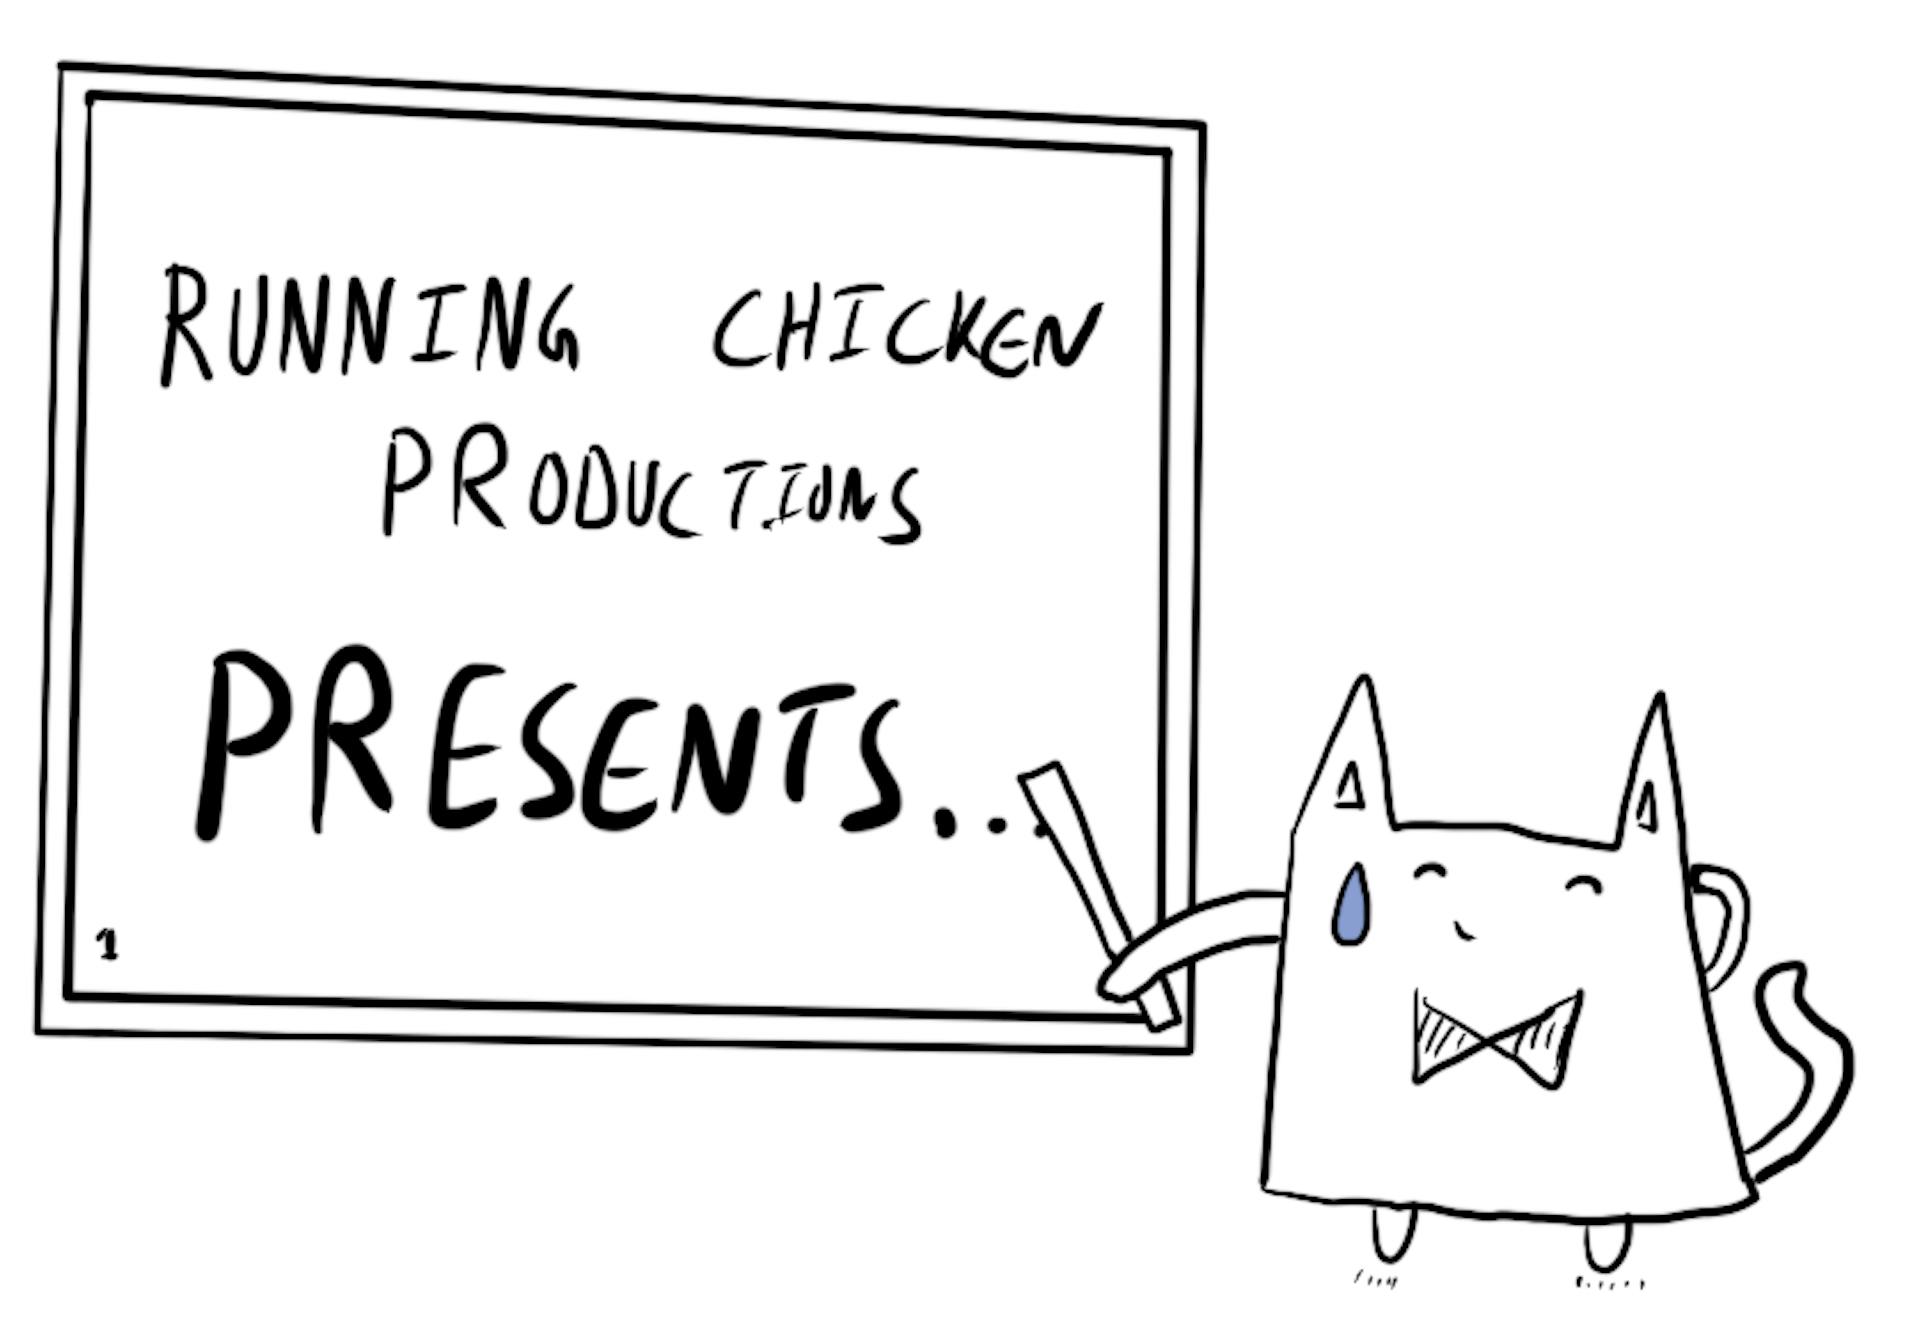 A Running Chicken Presentation. Illustration by Author